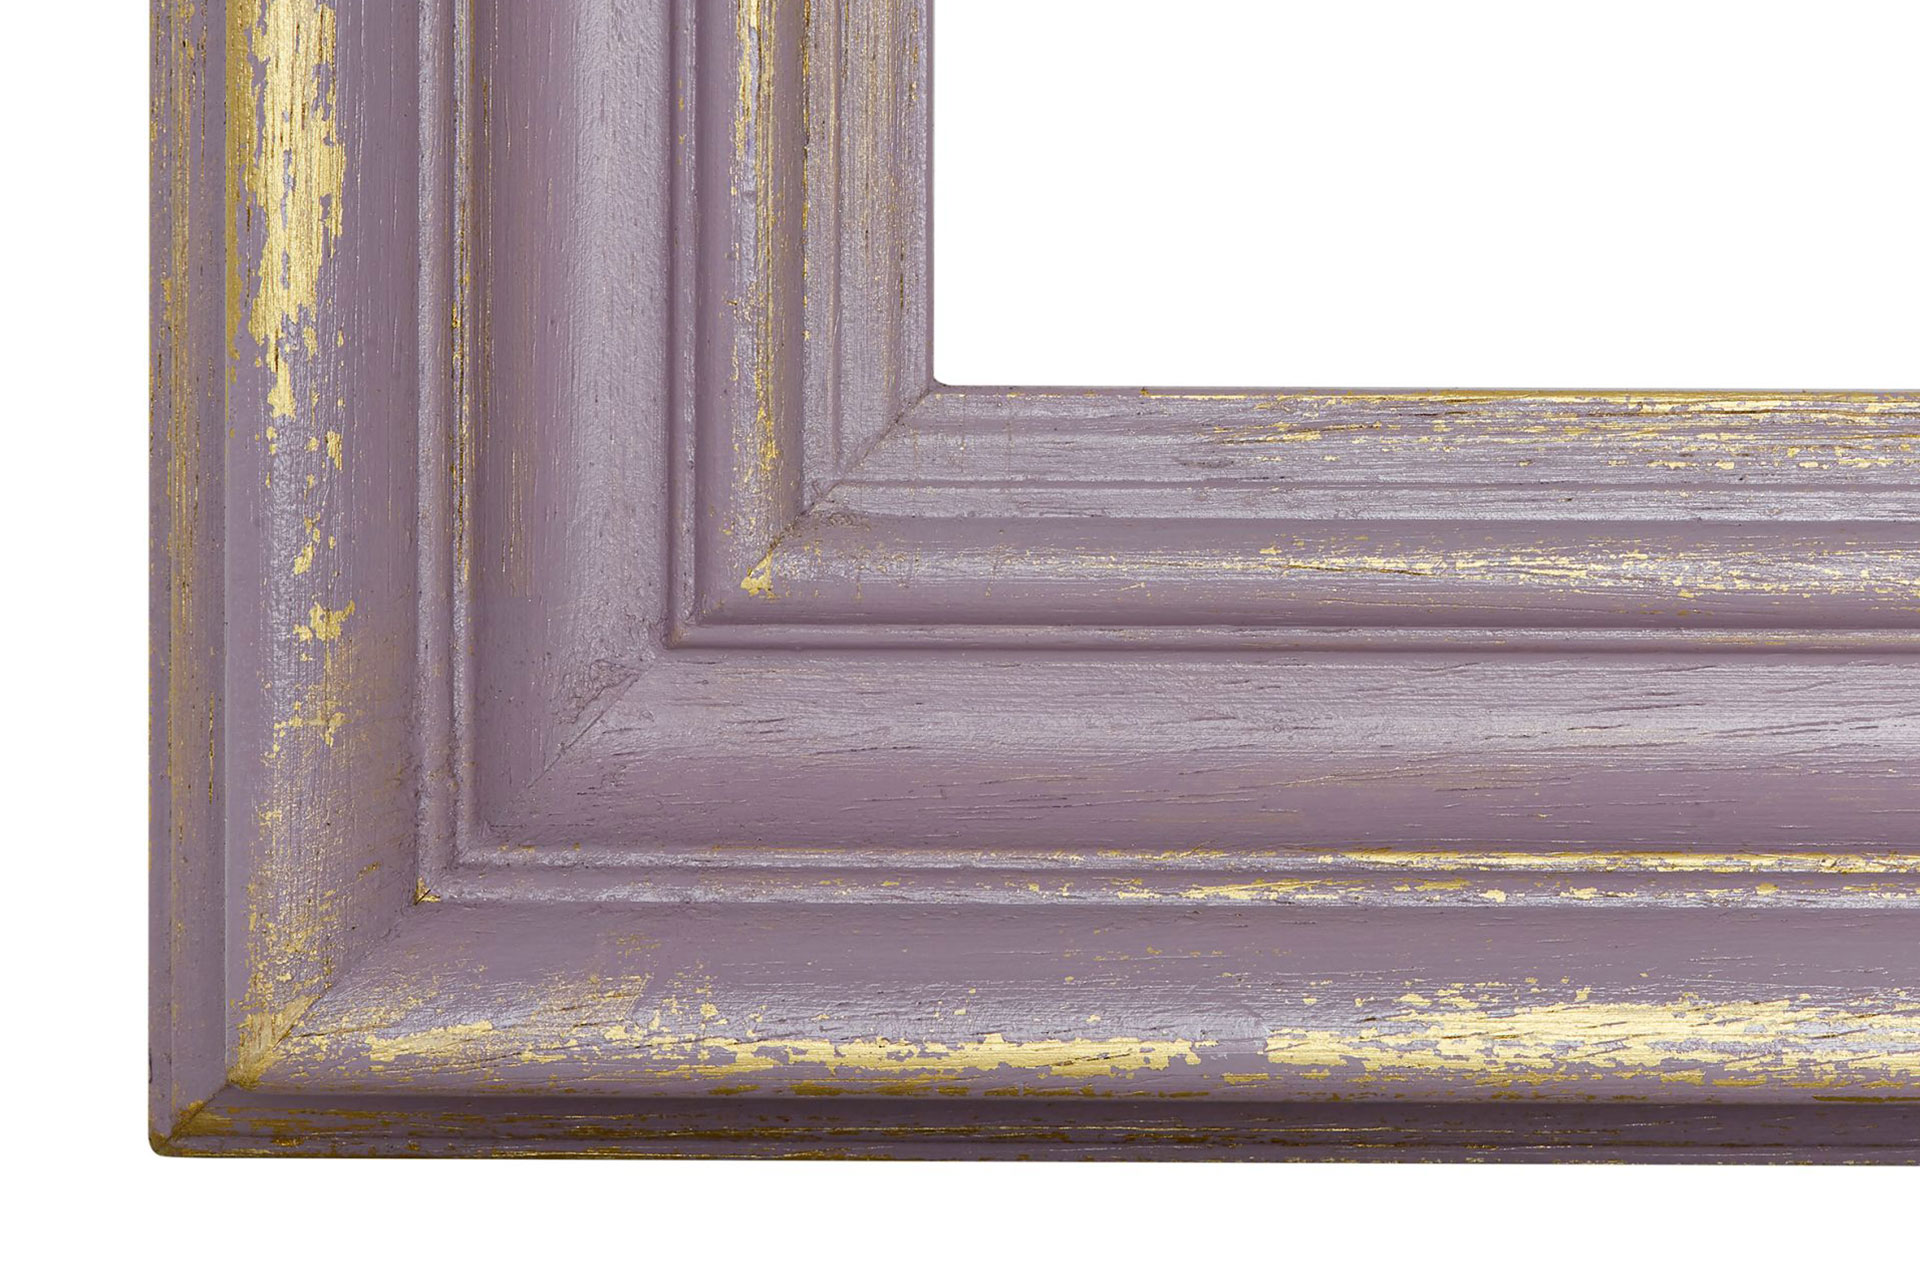 Wandspiegel Modell Rochefort, Gold/Pastellviolett, Form: rechteckig Herstellung: by ASR-Rahmendesign Material: Holz, Wandspiegel, Shabby-Chic, Ansicht Ecke